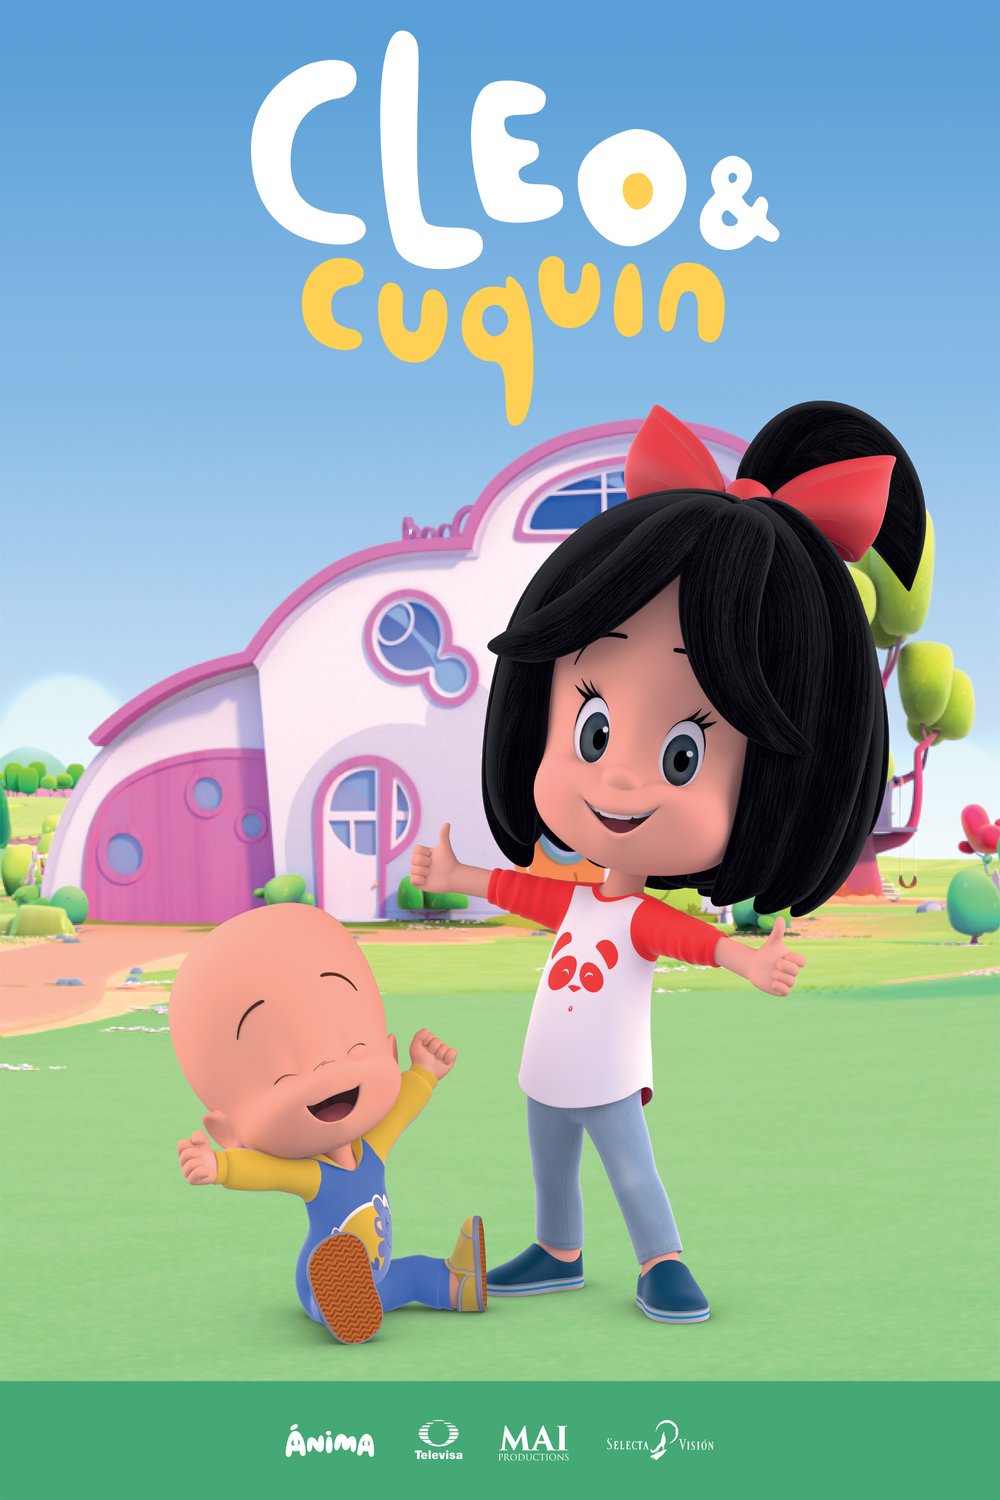 L'affiche originale du film Cleo & Cuquin en espagnol